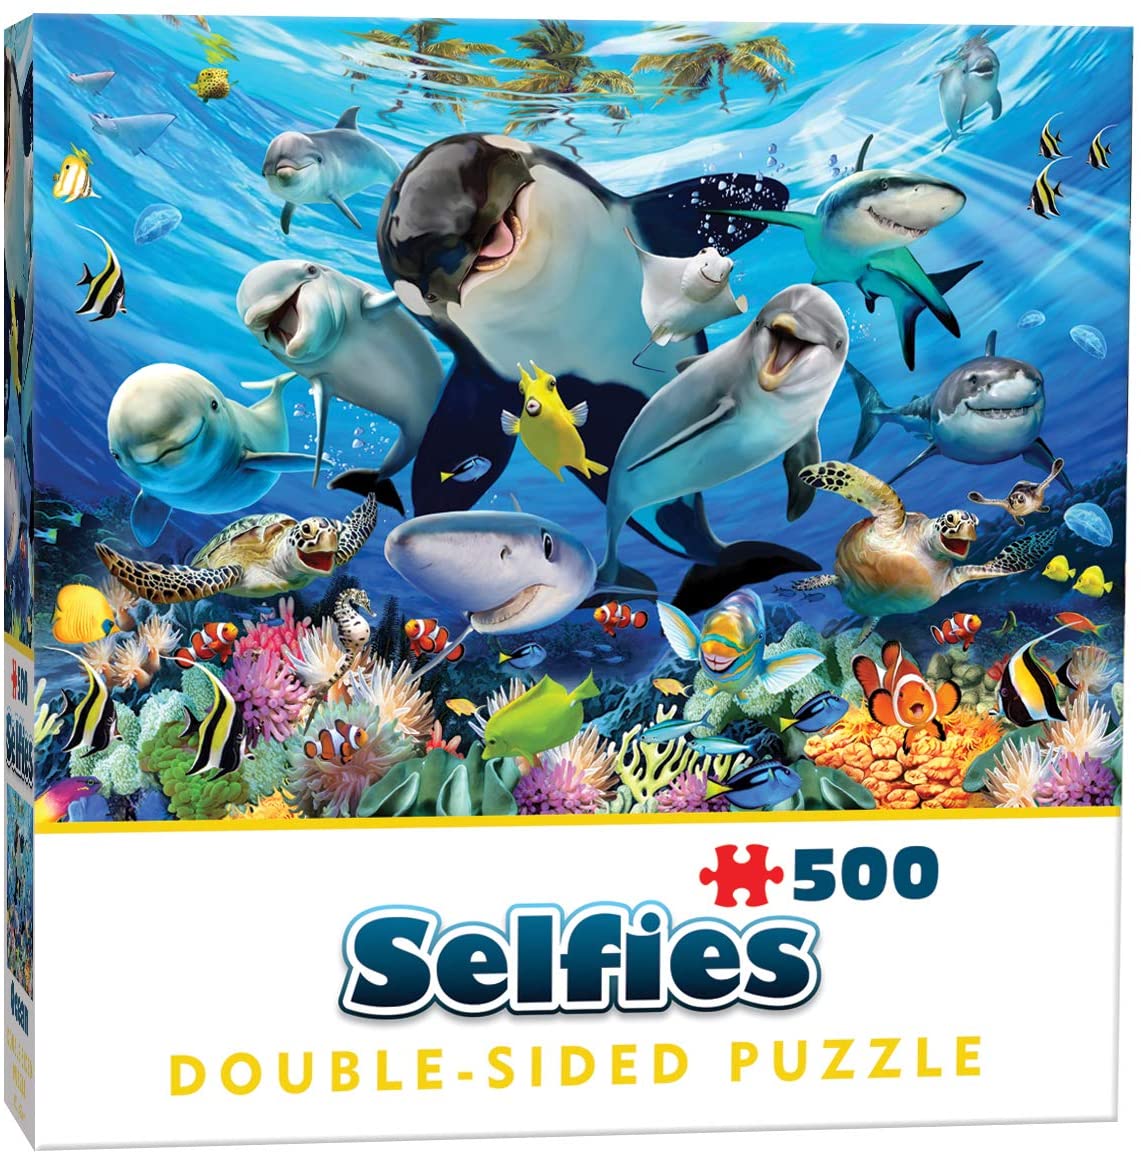 Double-Sided Selfie - Ocean Pals